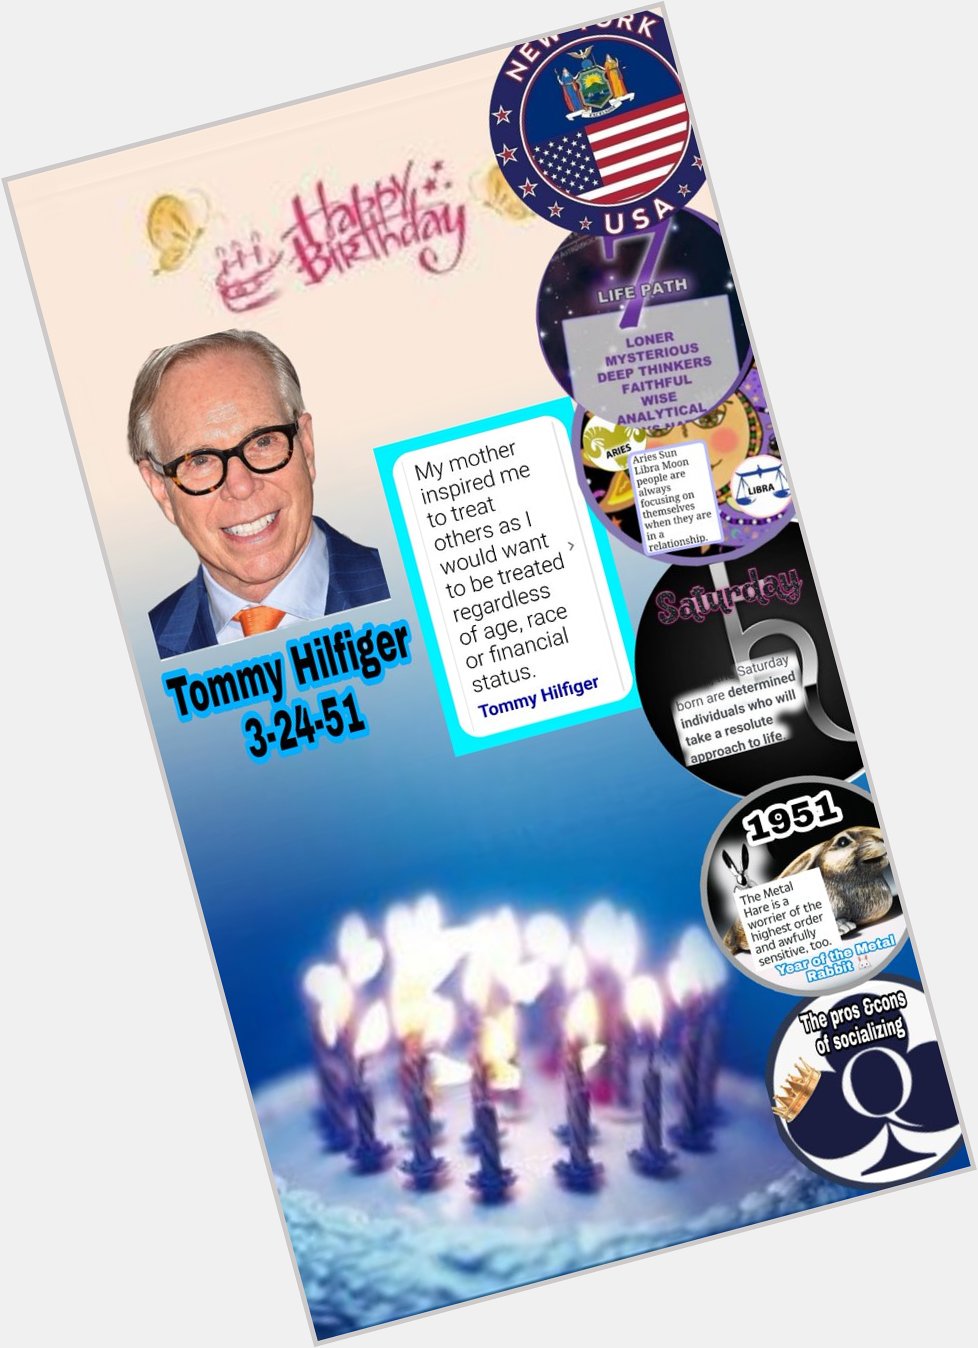 Happy birthday to Tommy Hilfiger         